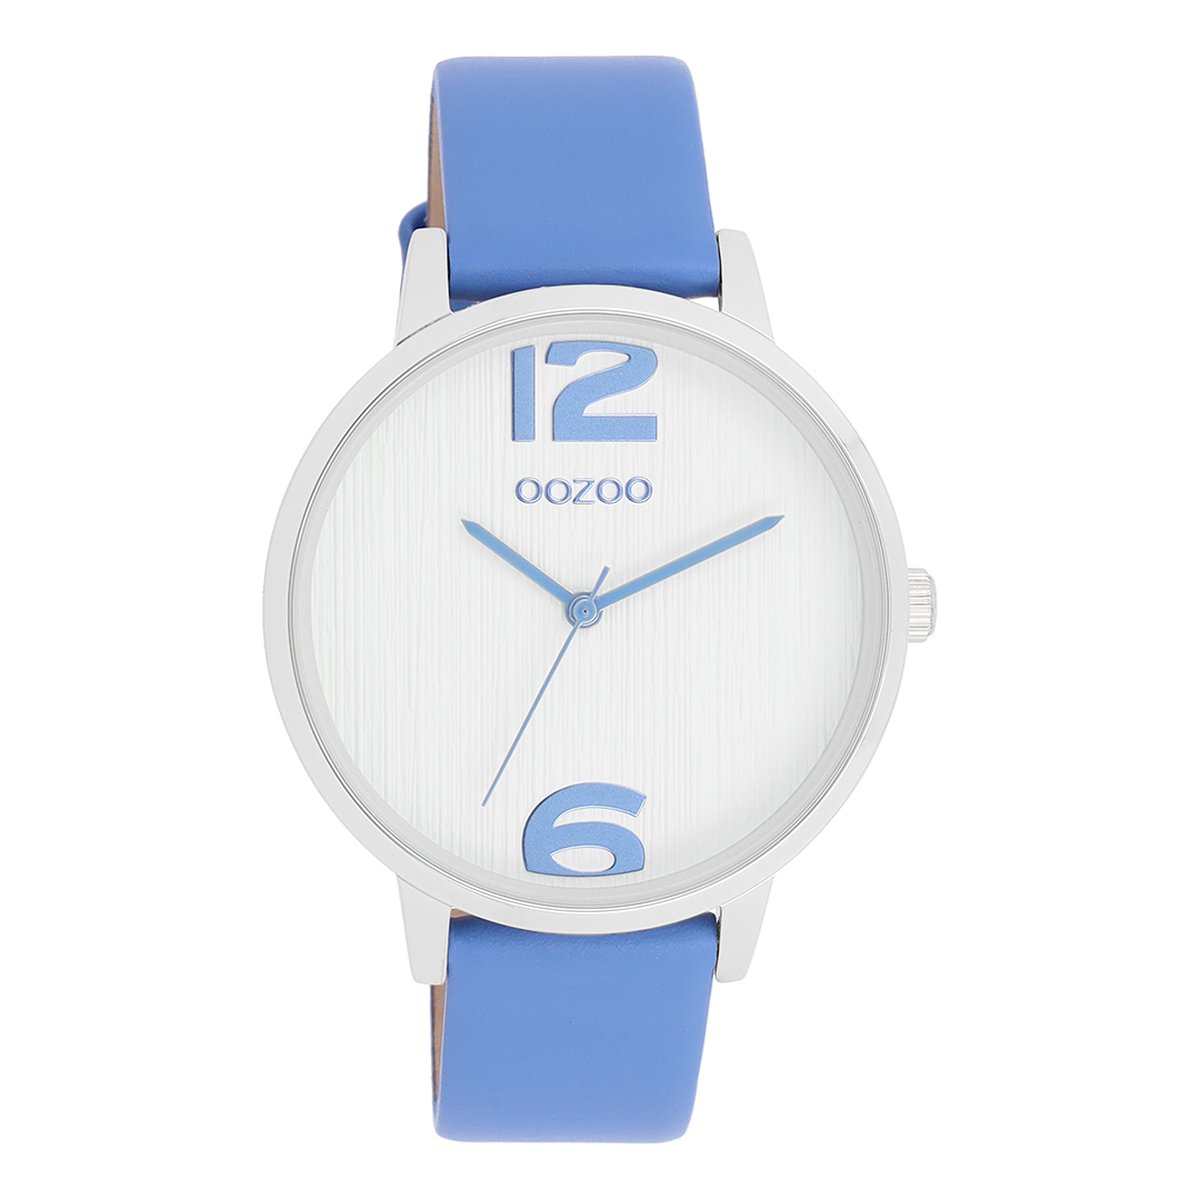 OOZOO Timepieces - Zilverkleurige OOZOO horloge met mineraal blauwe leren band - C11235